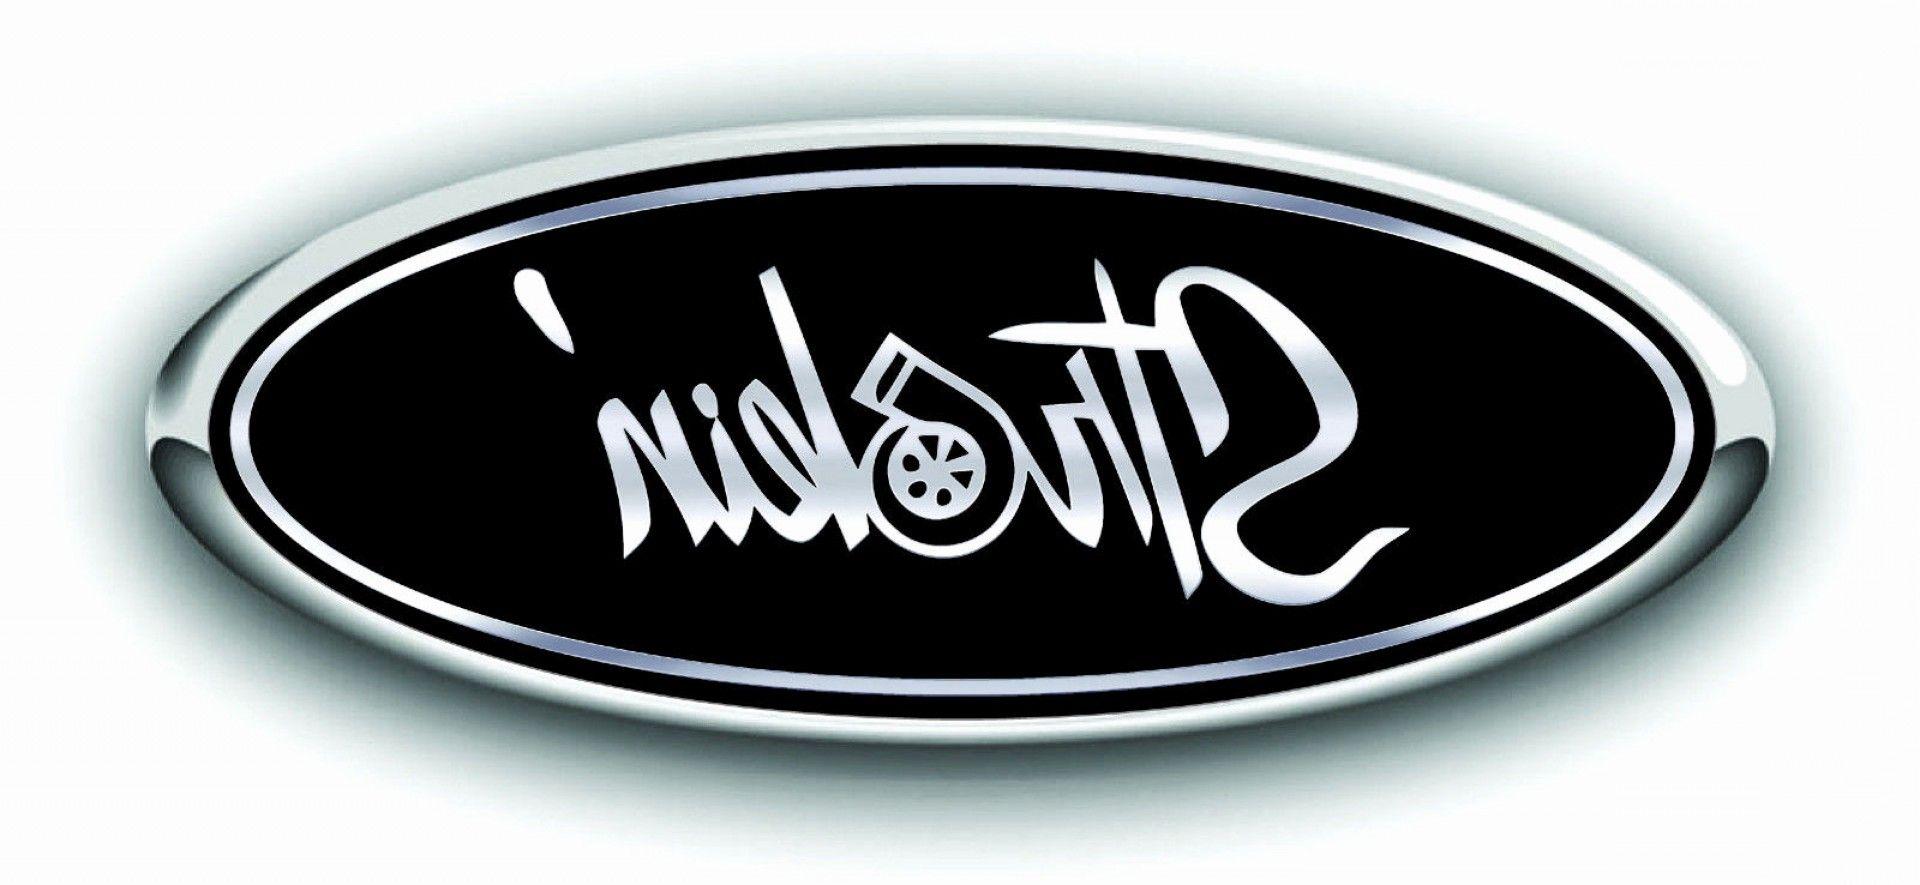 Small Ford Logo - Small Ford Logo Stickers Violassi Striping Company Ford Edge Logo